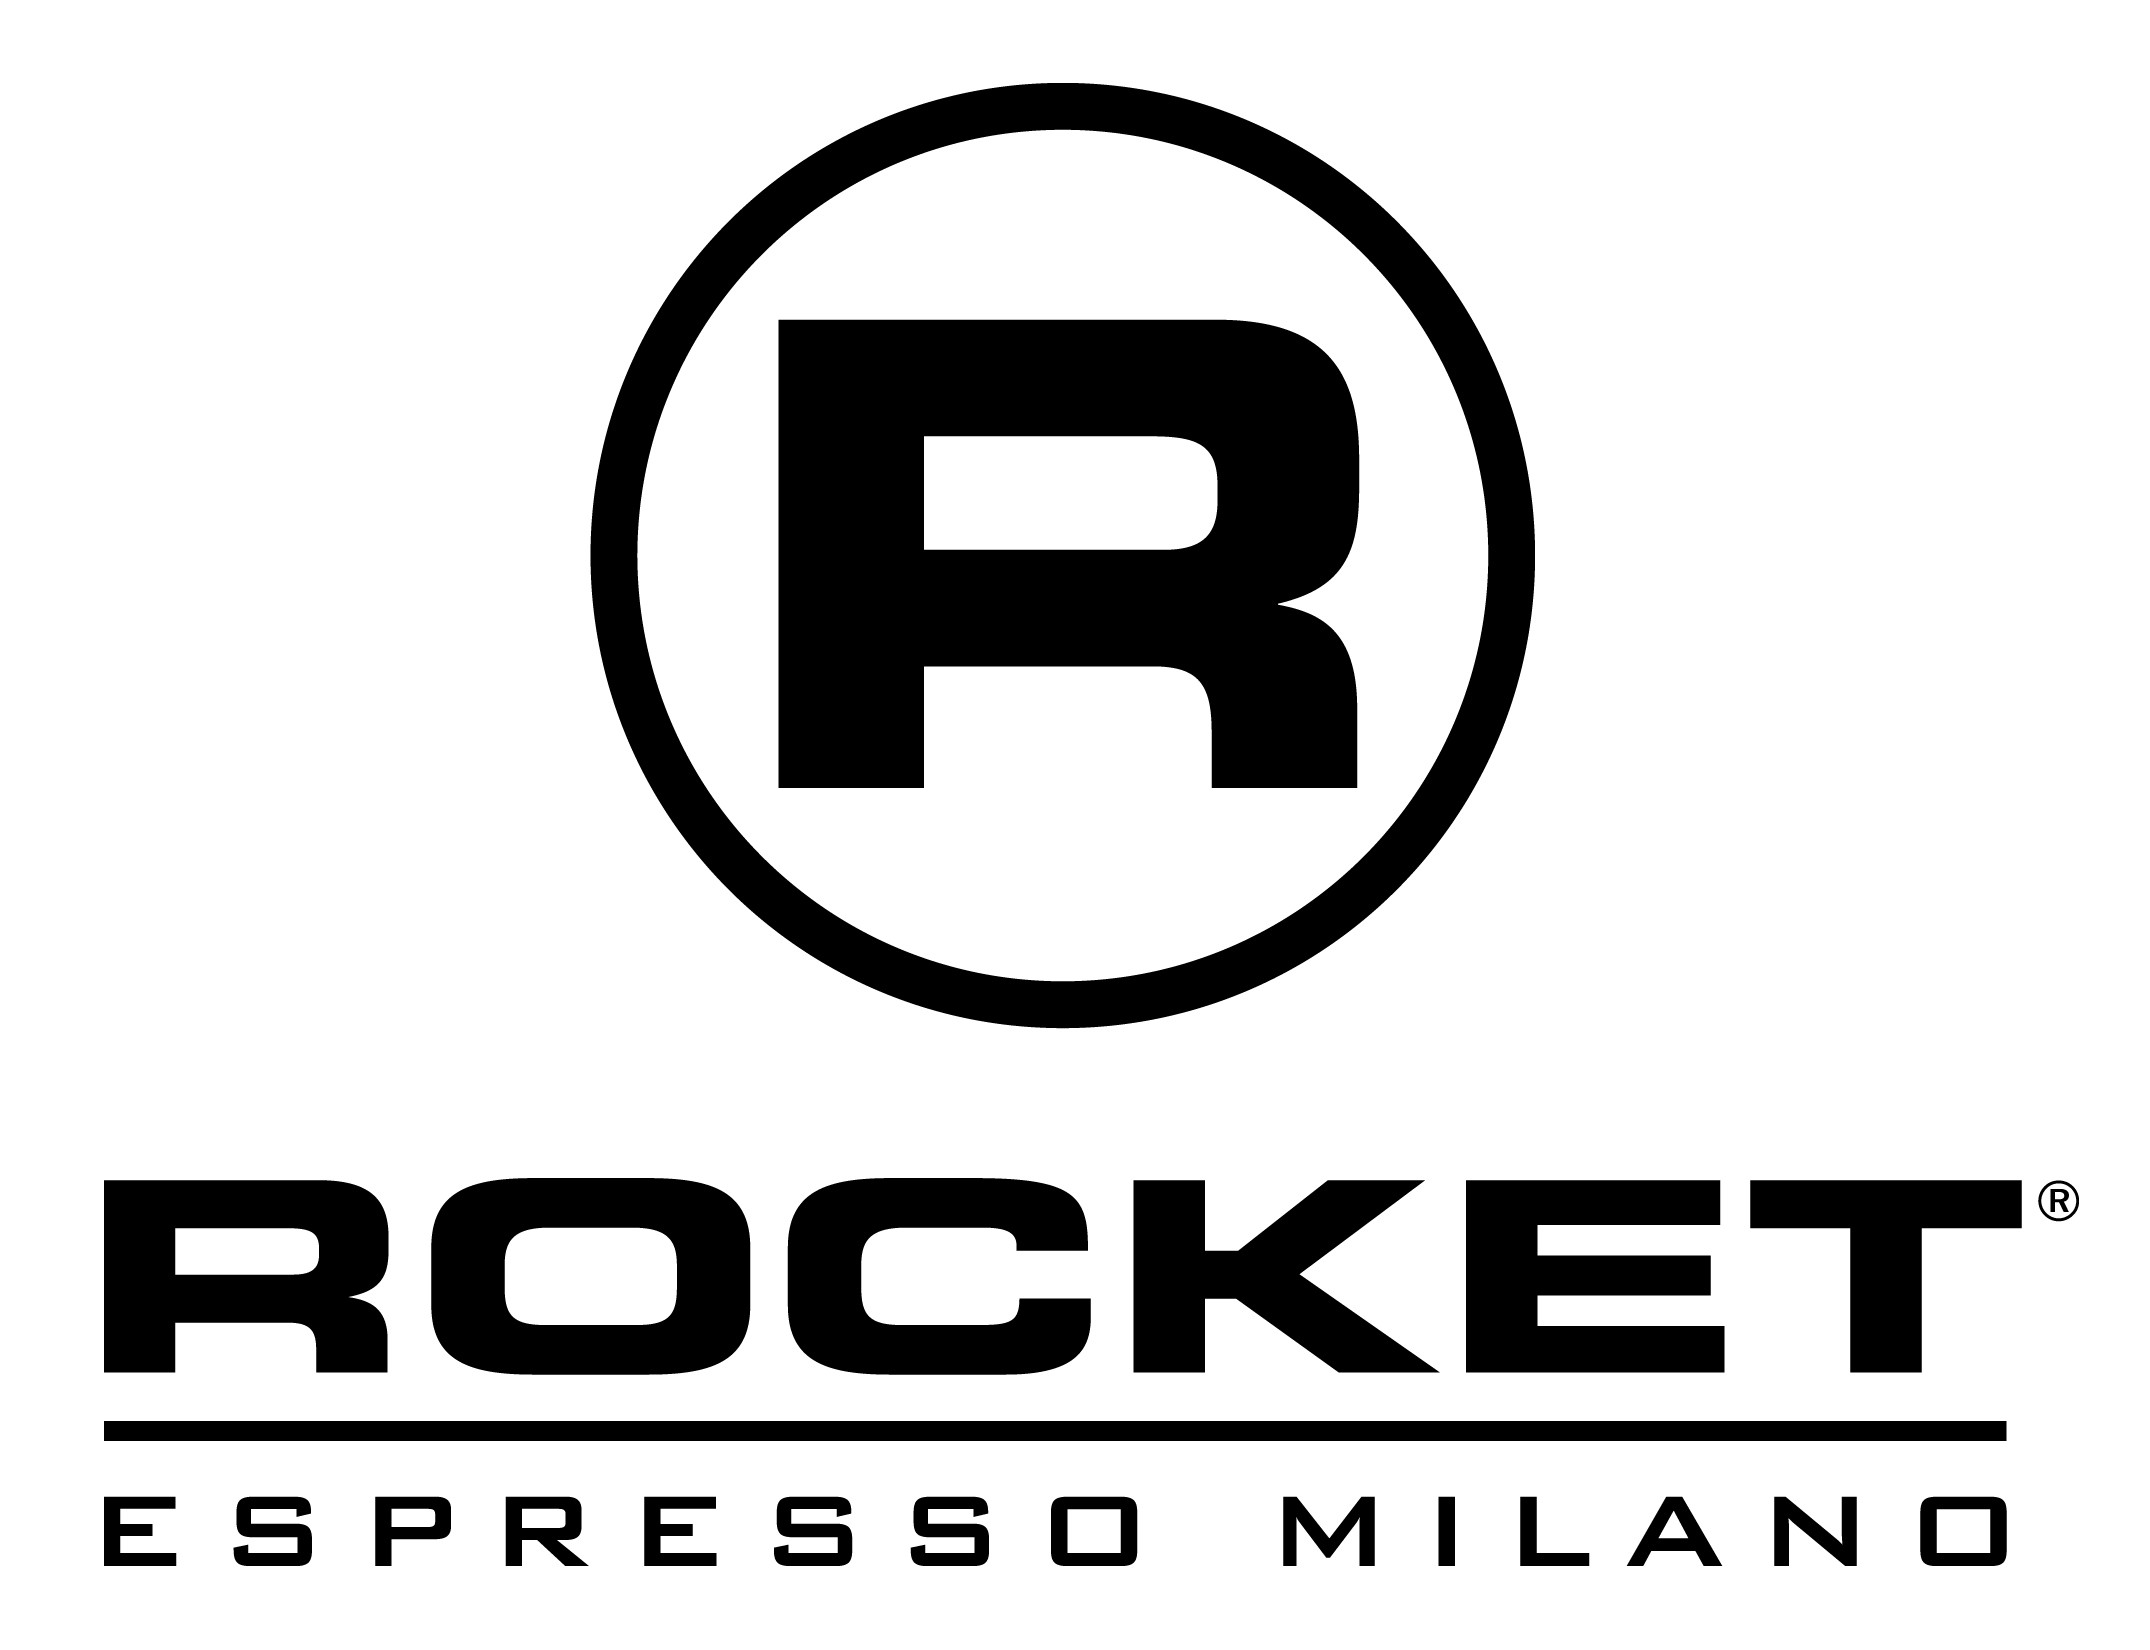 ROCKET APPARTAMENTO SERIE NERA ESPRESSO MACHINE | EspressoCoffeeShop